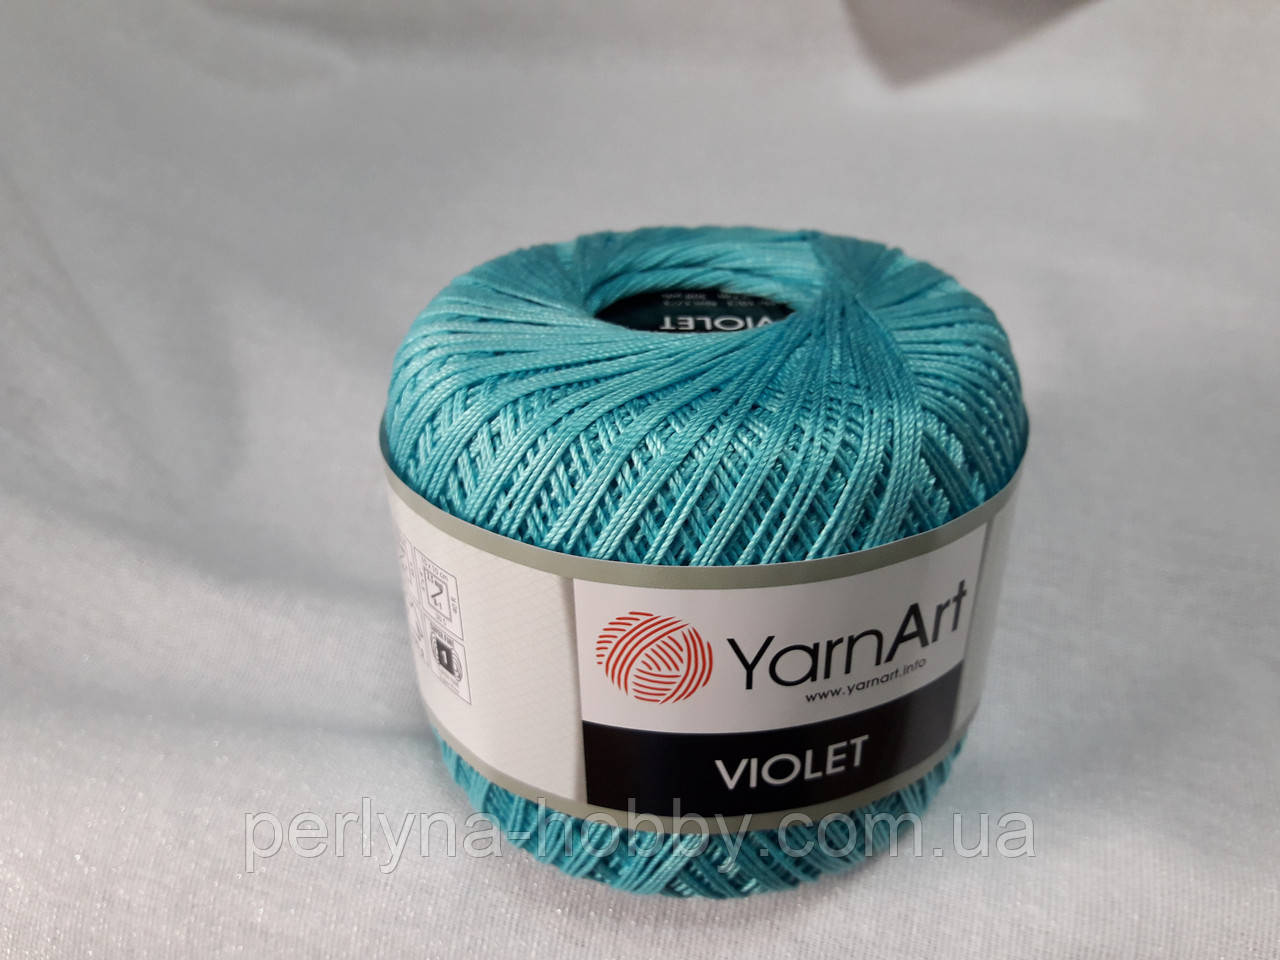 Пряжа  нитка для в'язання Violet YarnArt 100% бавовна бірюза світла пастельна№ 5353